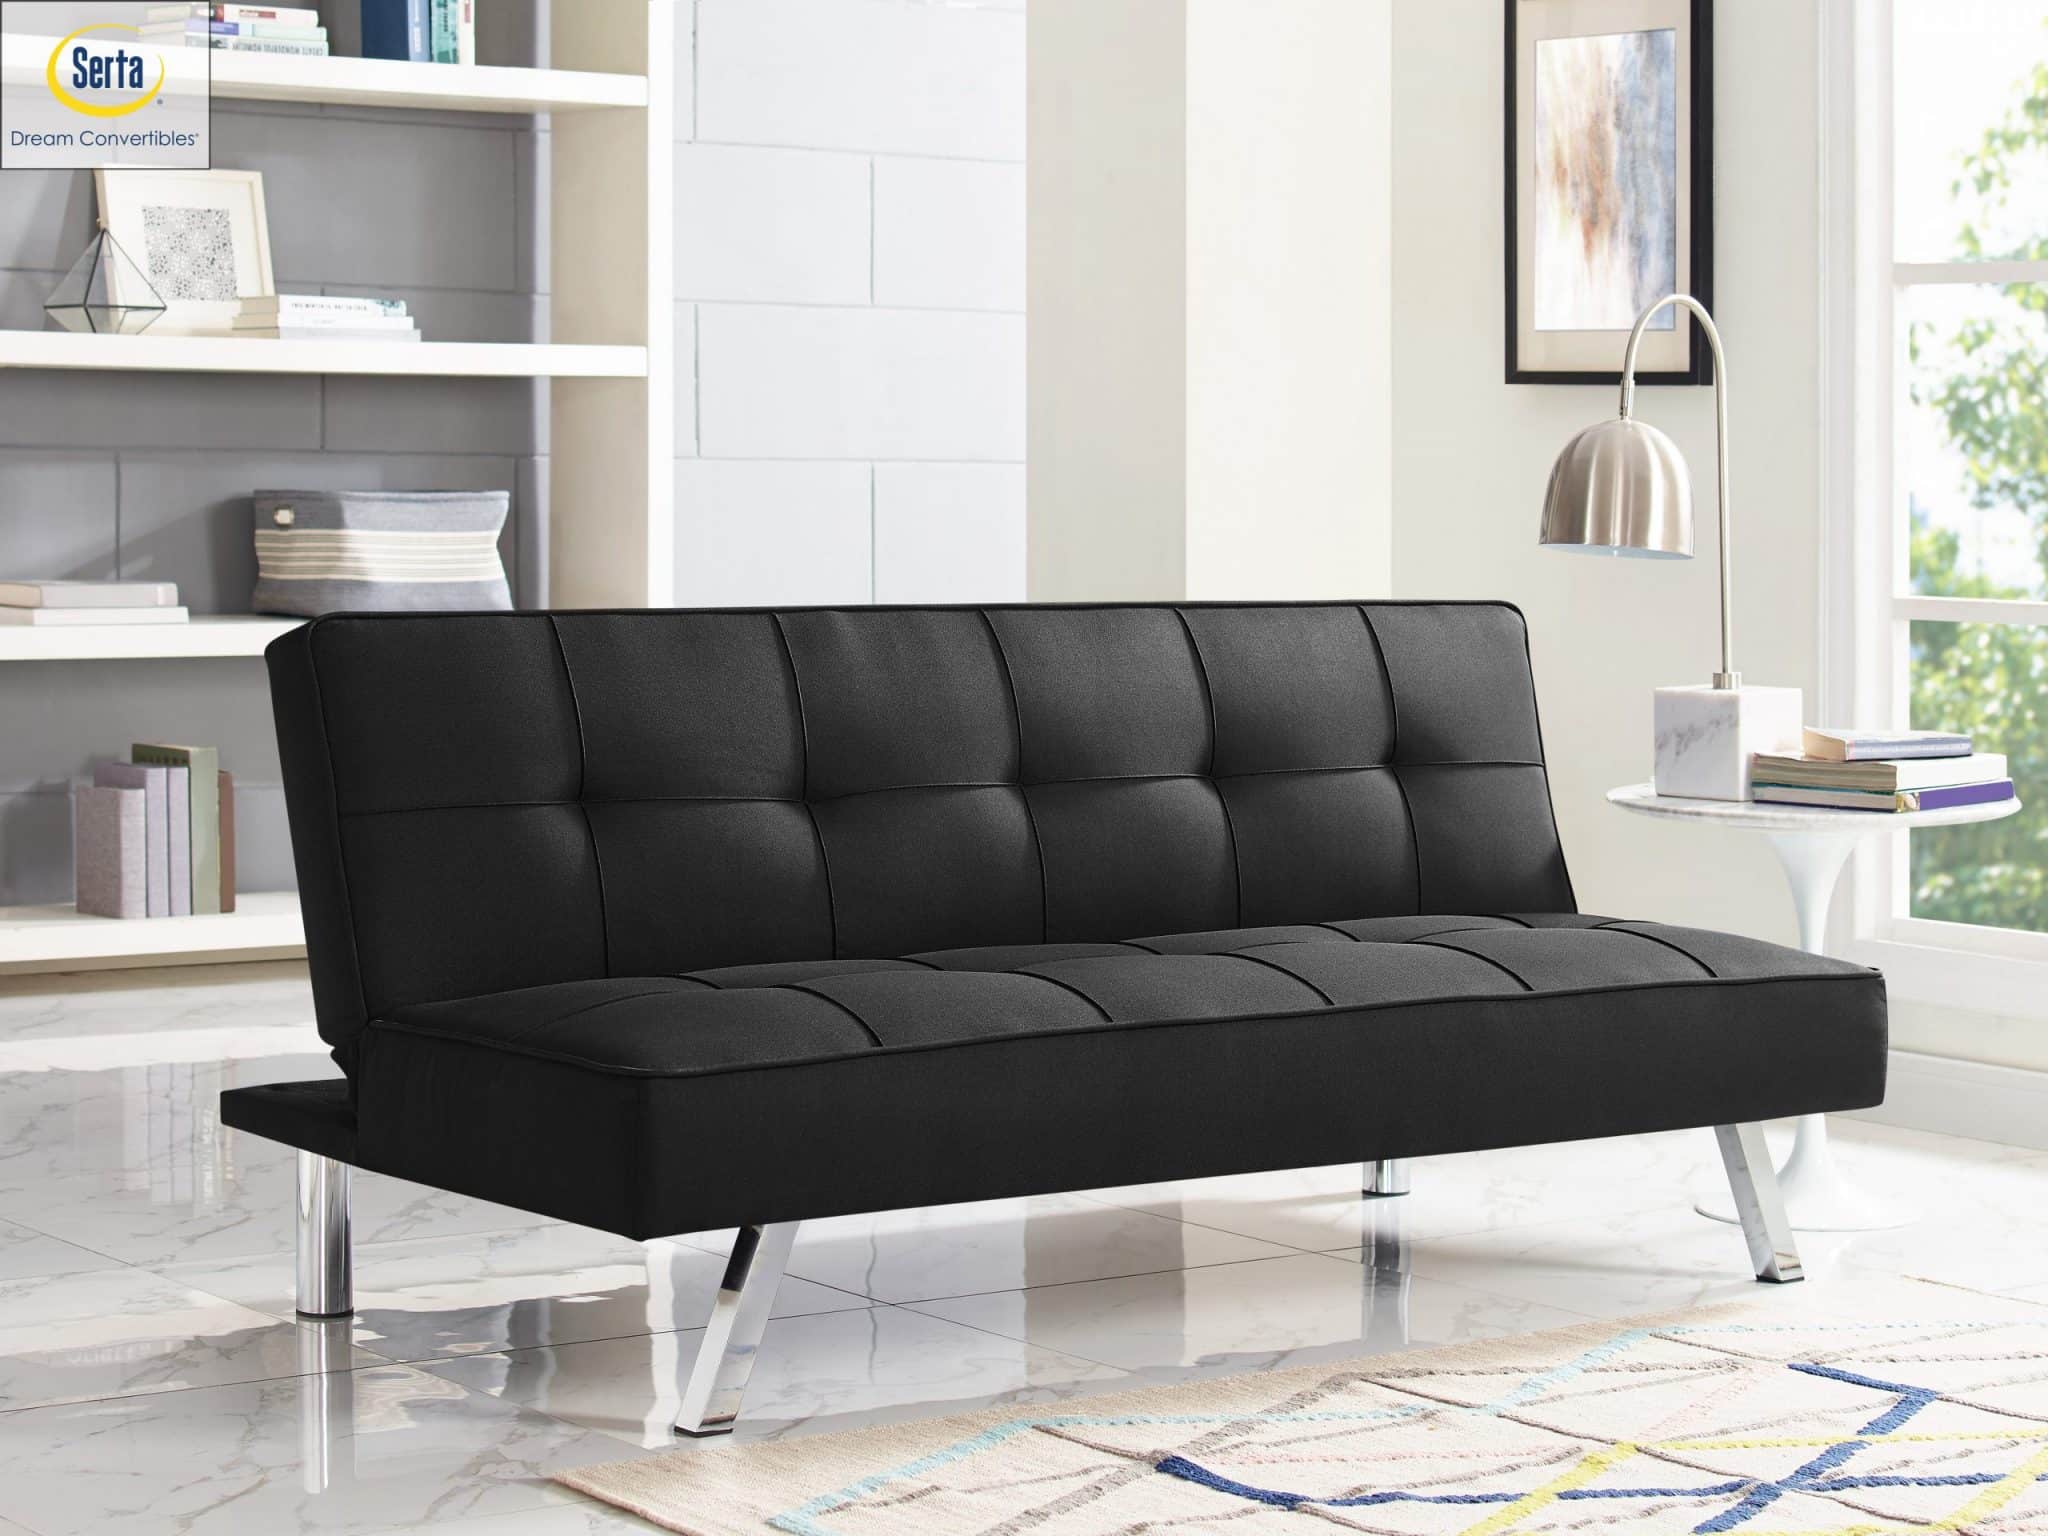 3-Seat Multi-function Upholstery Fabric Sofa, Black